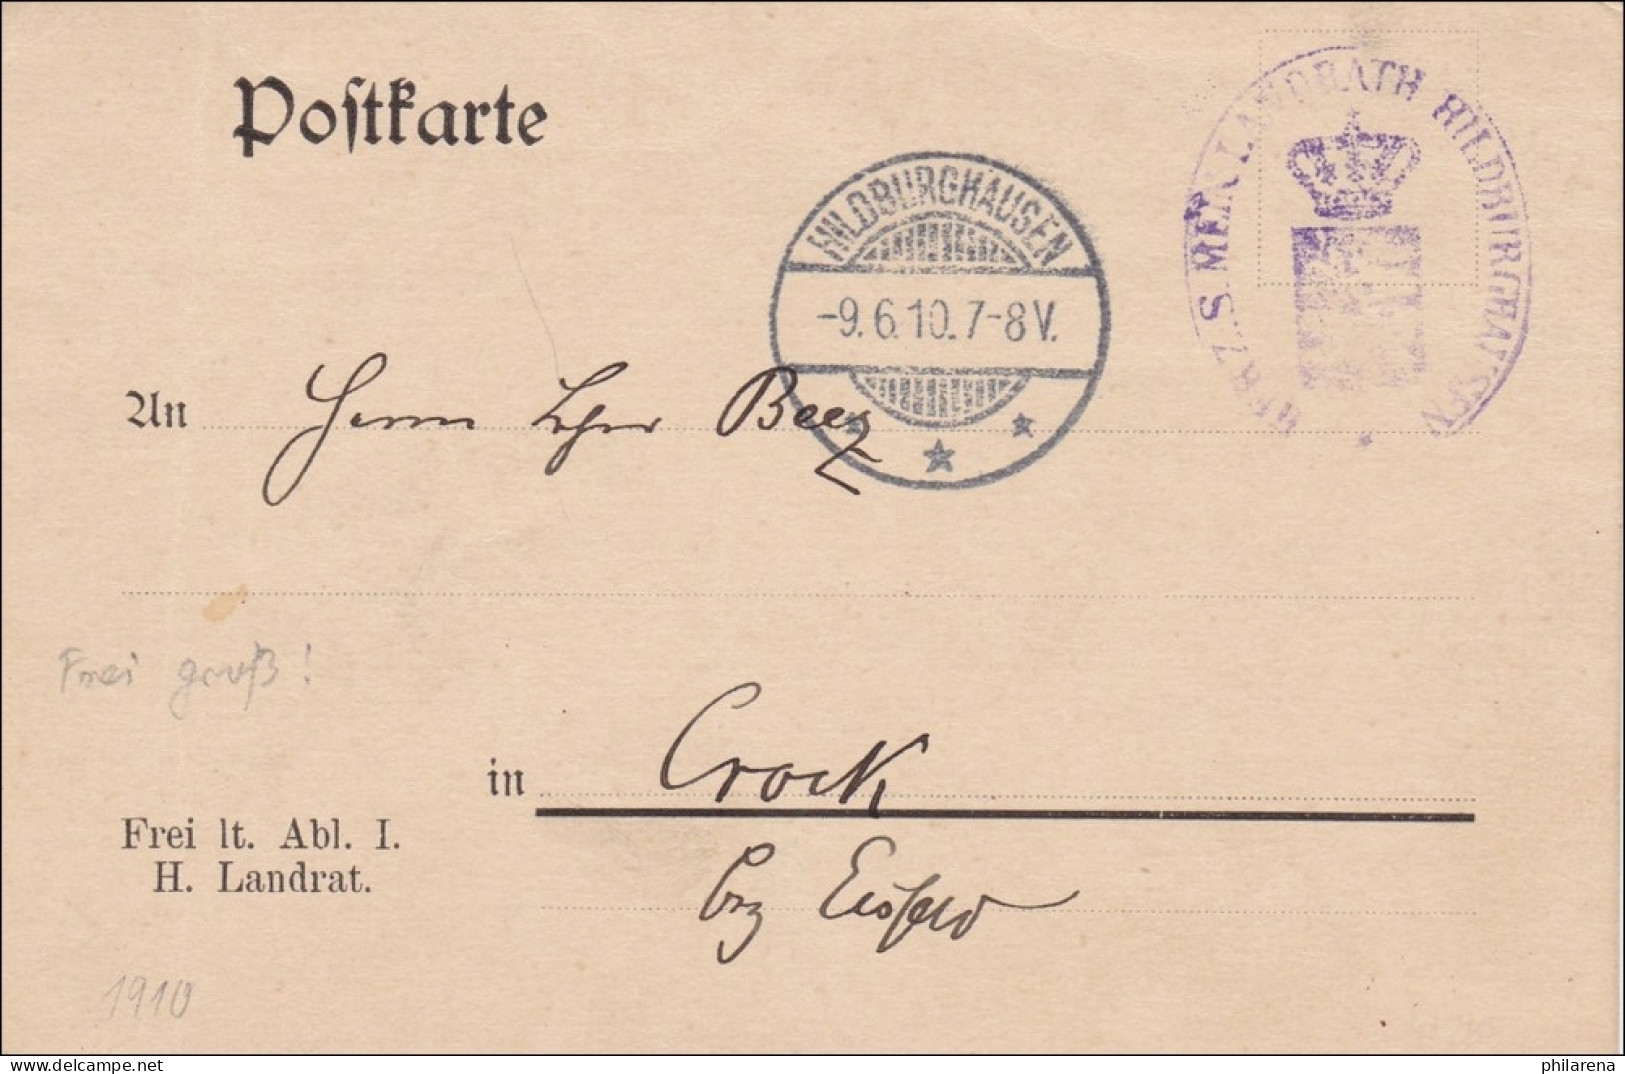 Postkarte Hildburghausen 1910 Nach Crock/Eisfeld - Covers & Documents